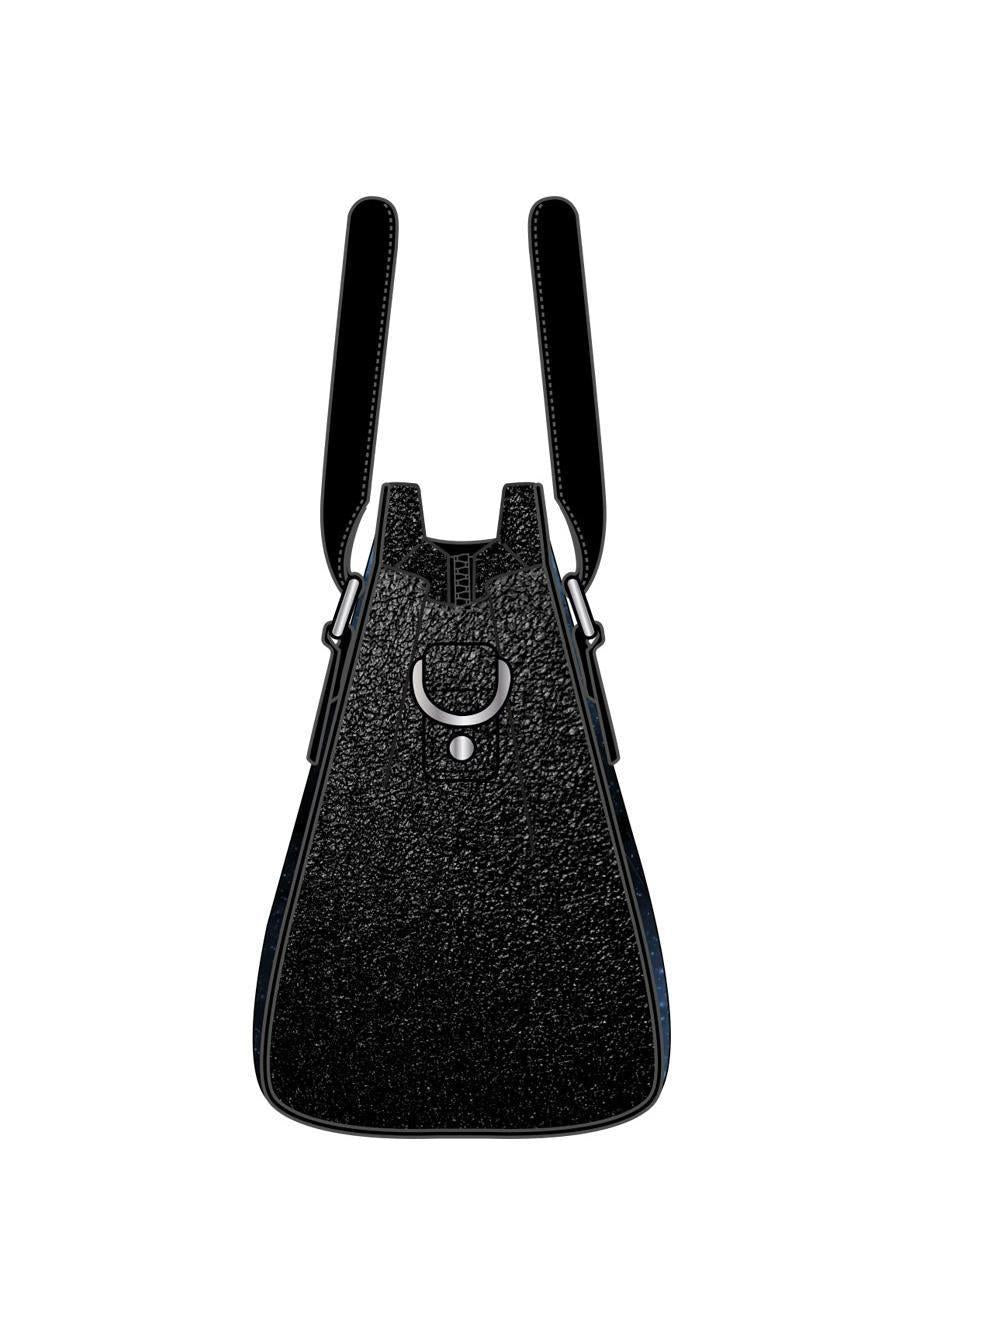 HARRY POTTER - Expecto Patronum - Luxe Handbag